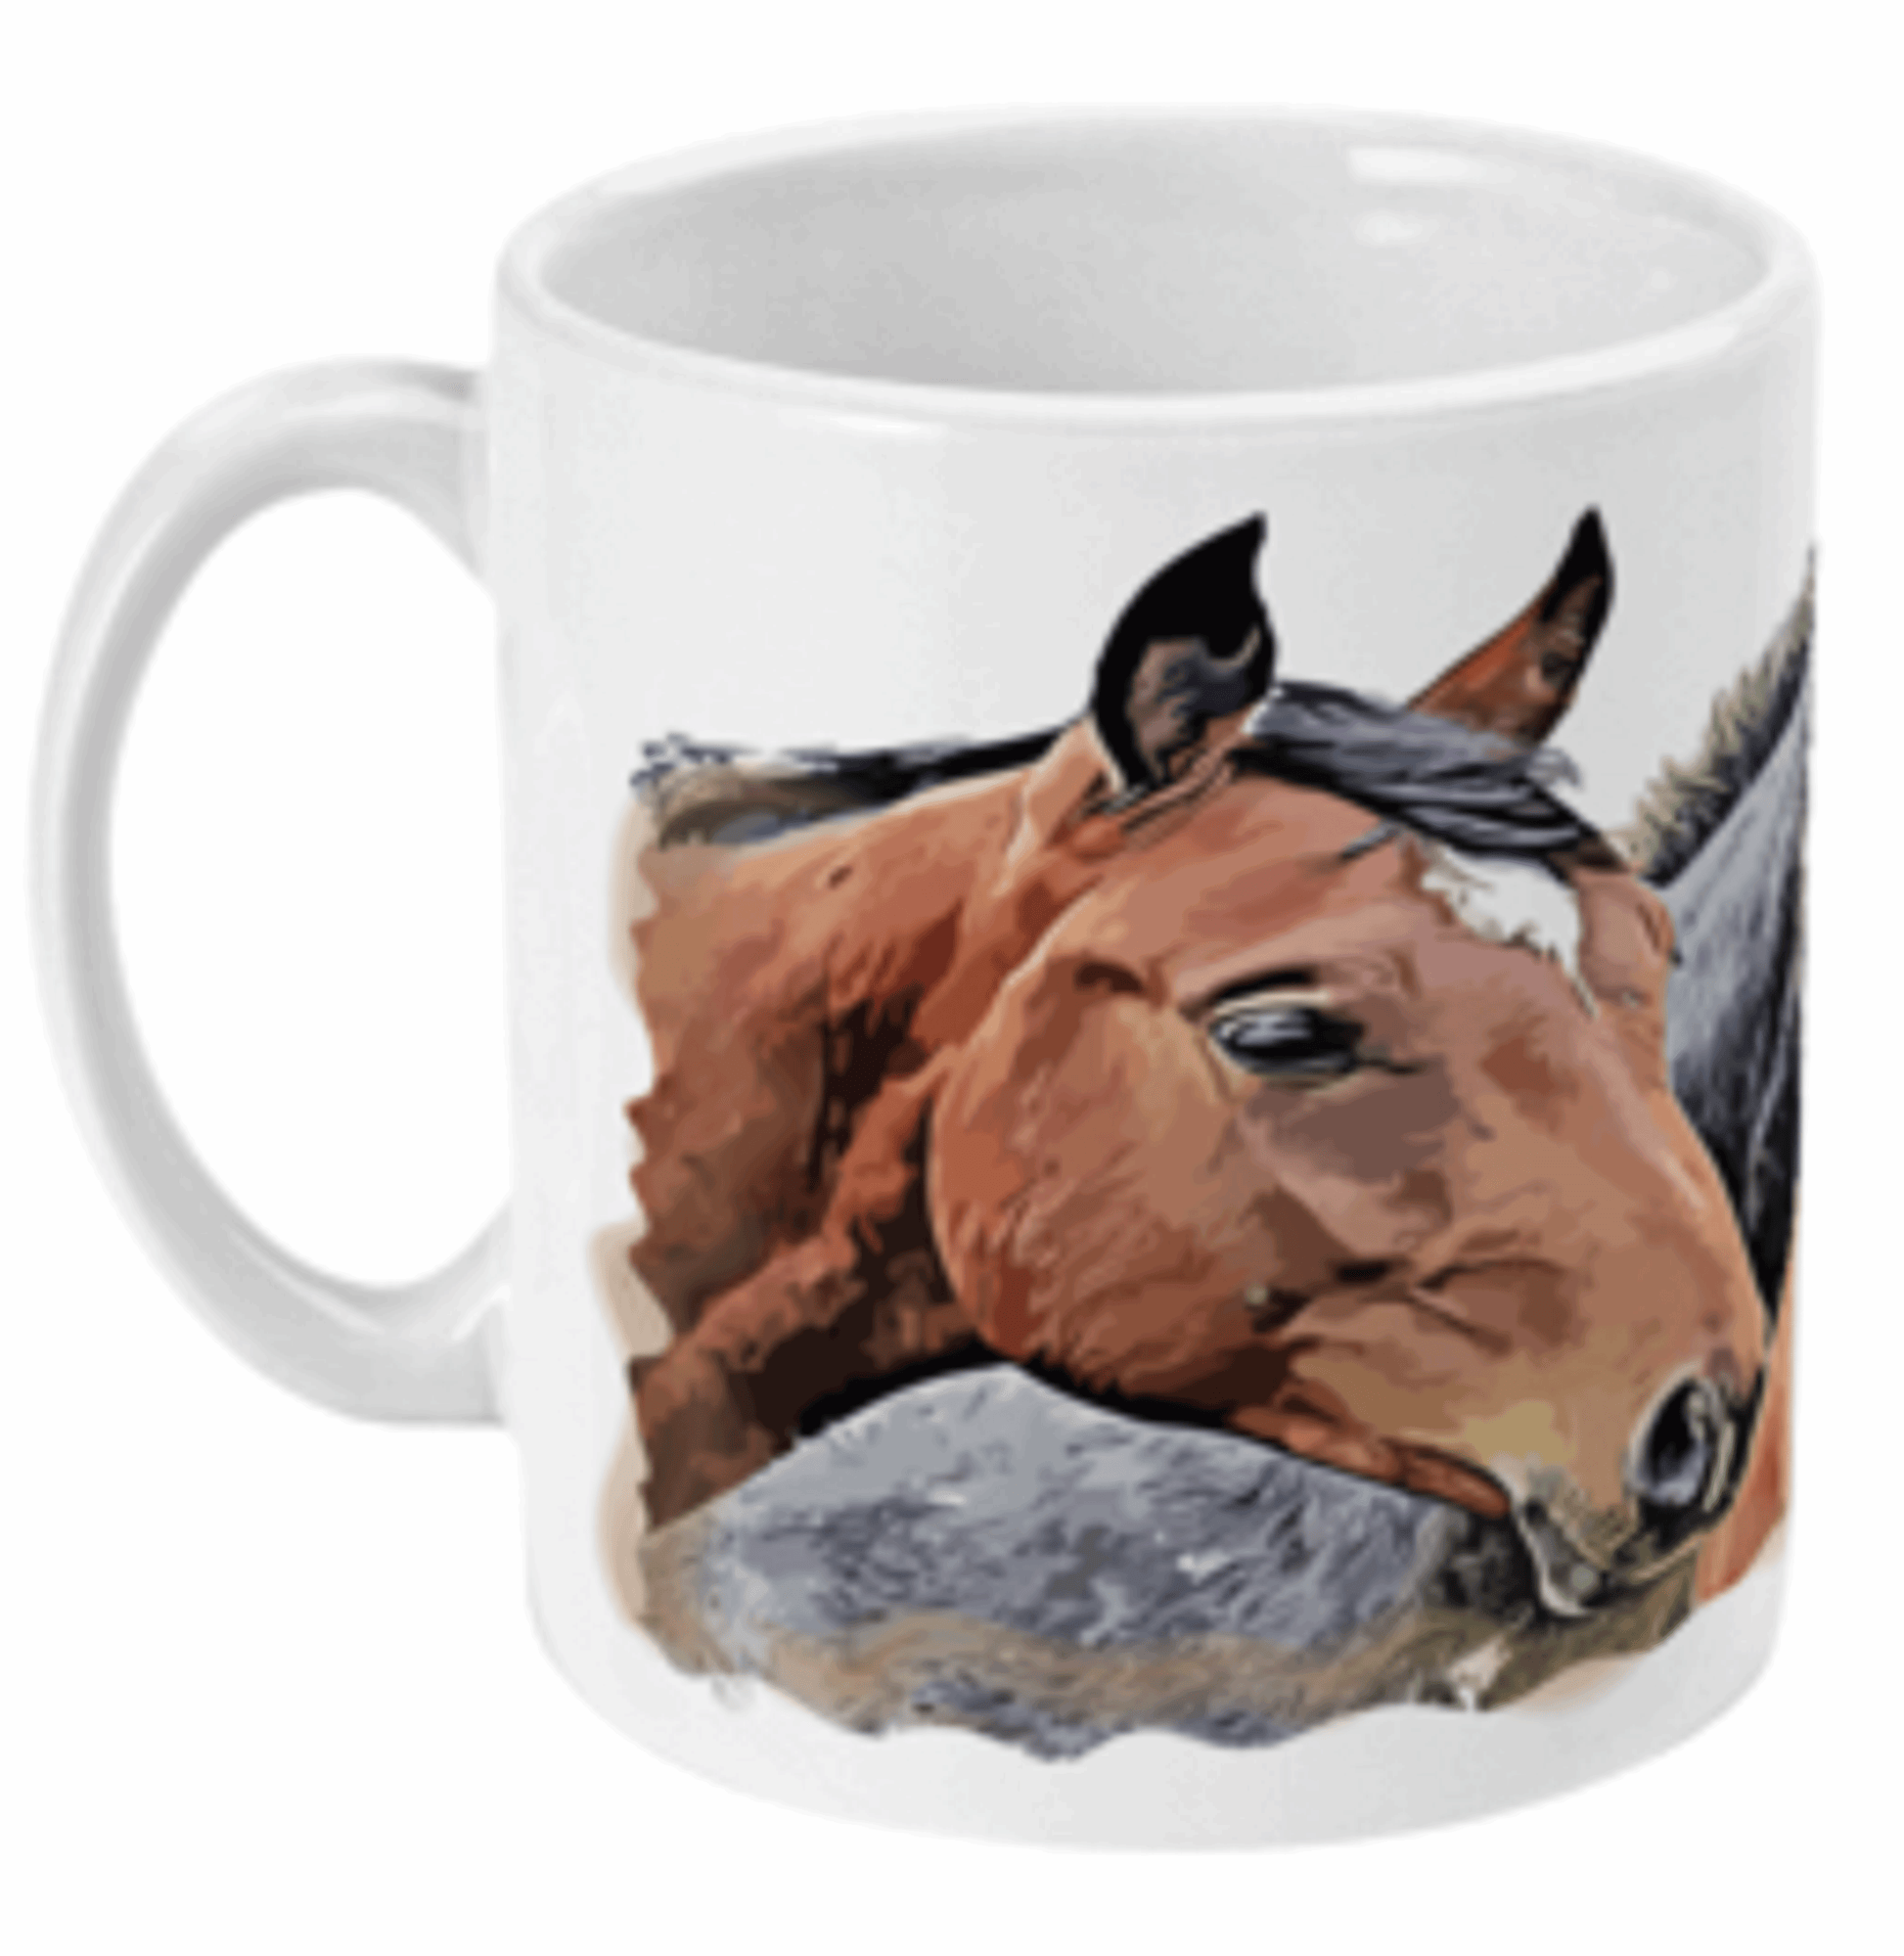  Three Beautiful Horses Coffee or Tea Mug by Free Spirit Accessories sold by Free Spirit Accessories